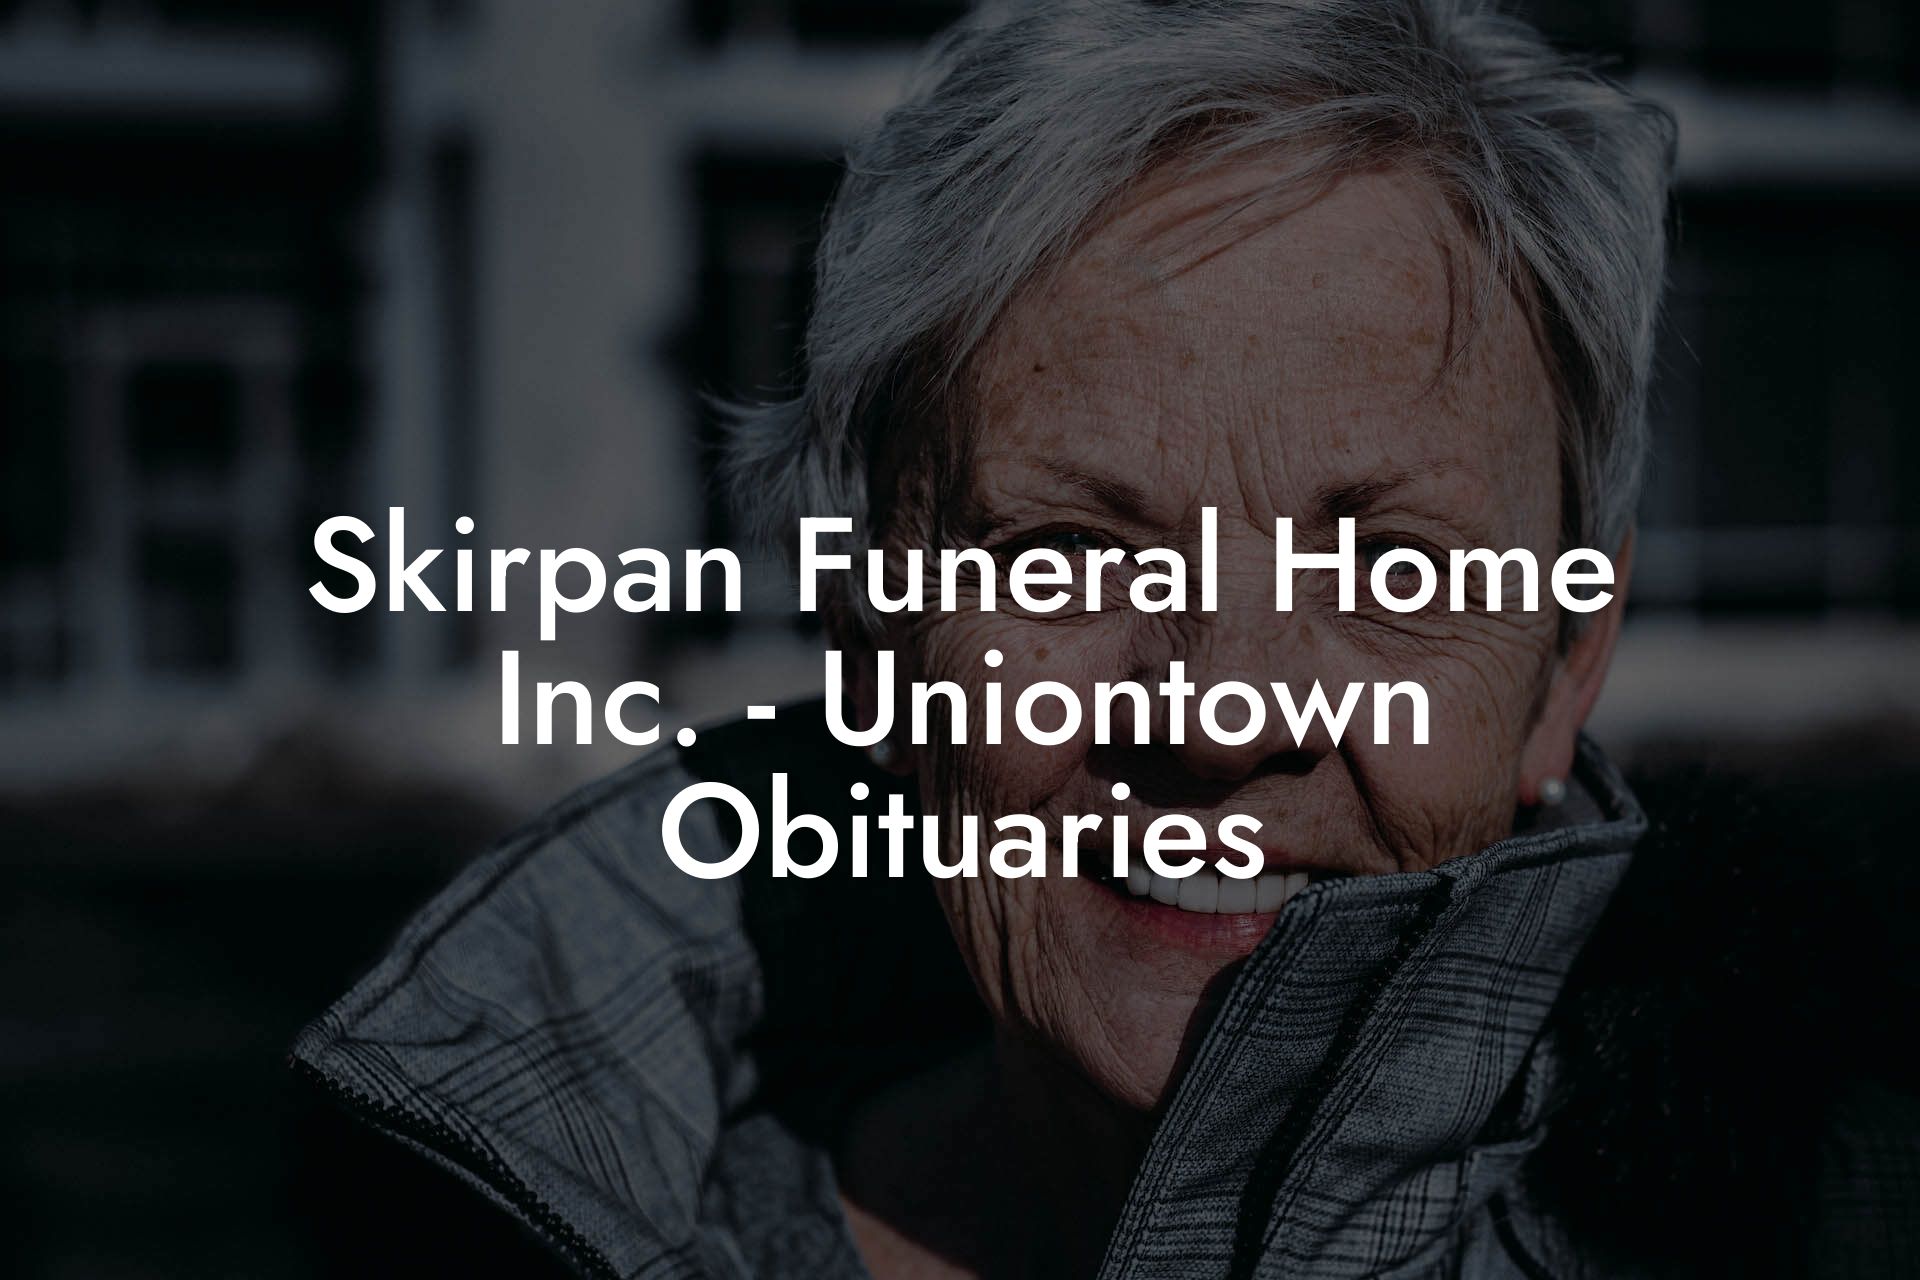 Skirpan Funeral Home Inc. - Uniontown Obituaries